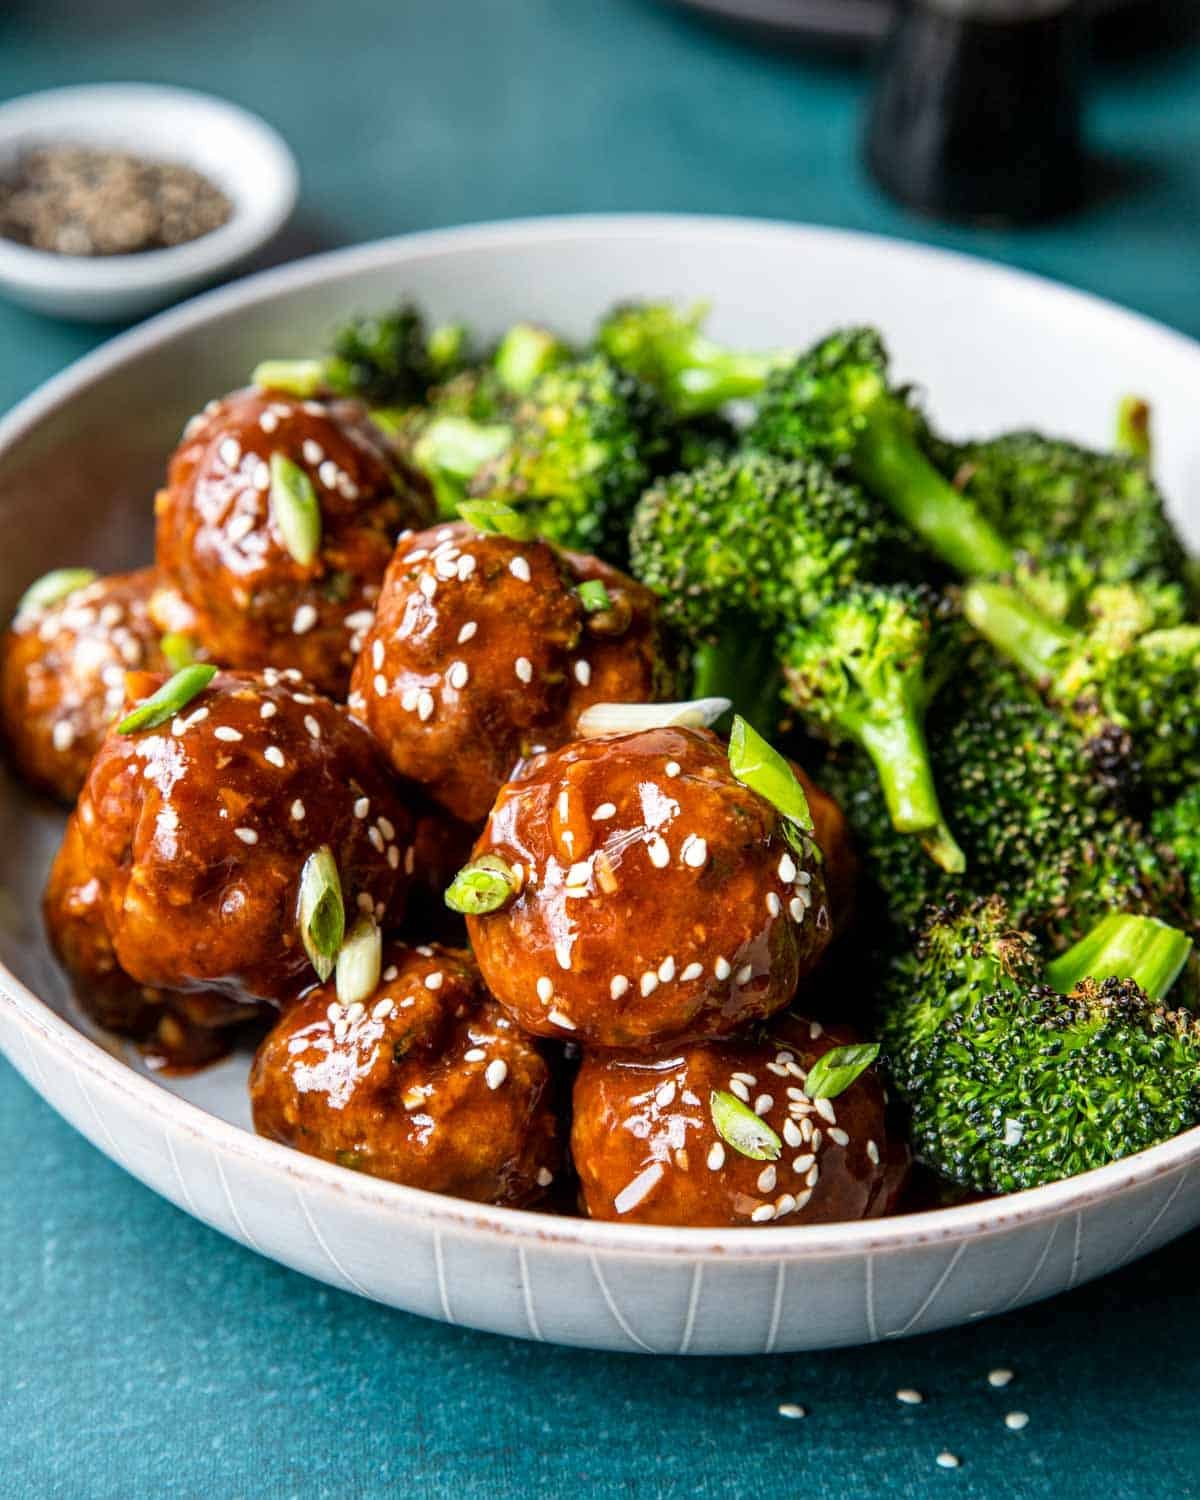 Hoisin Glazed meatballs in a bowl with roasted broccoli